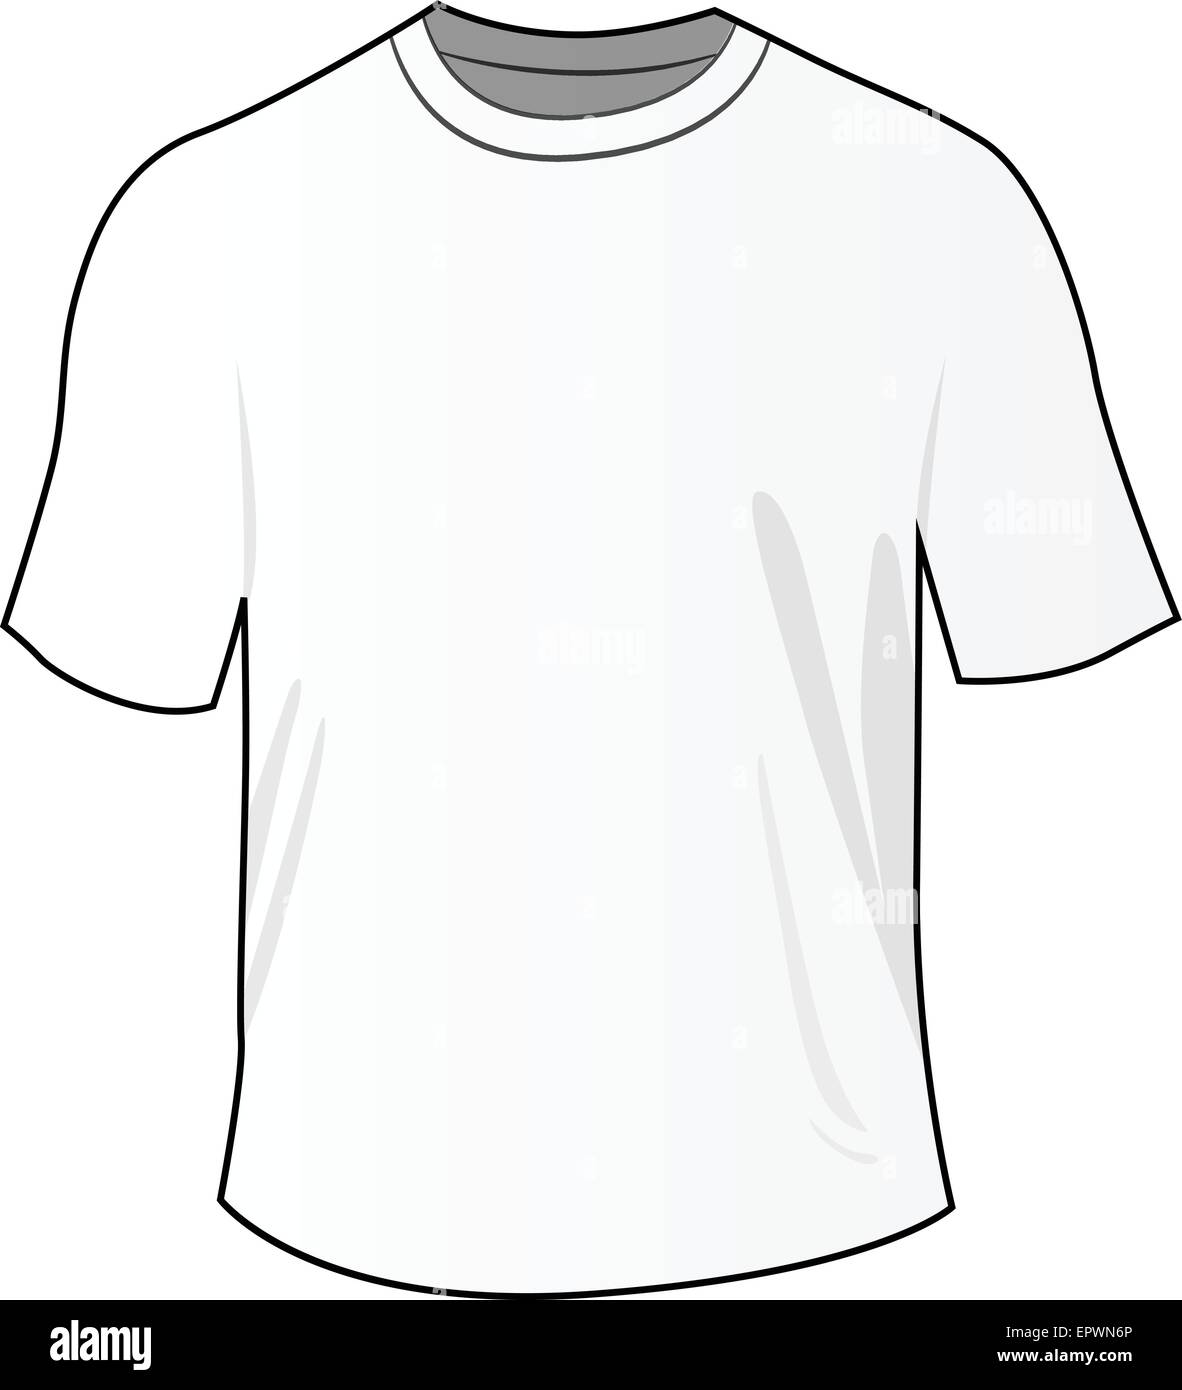 illustration of blank white front tee shirt Stock Vector